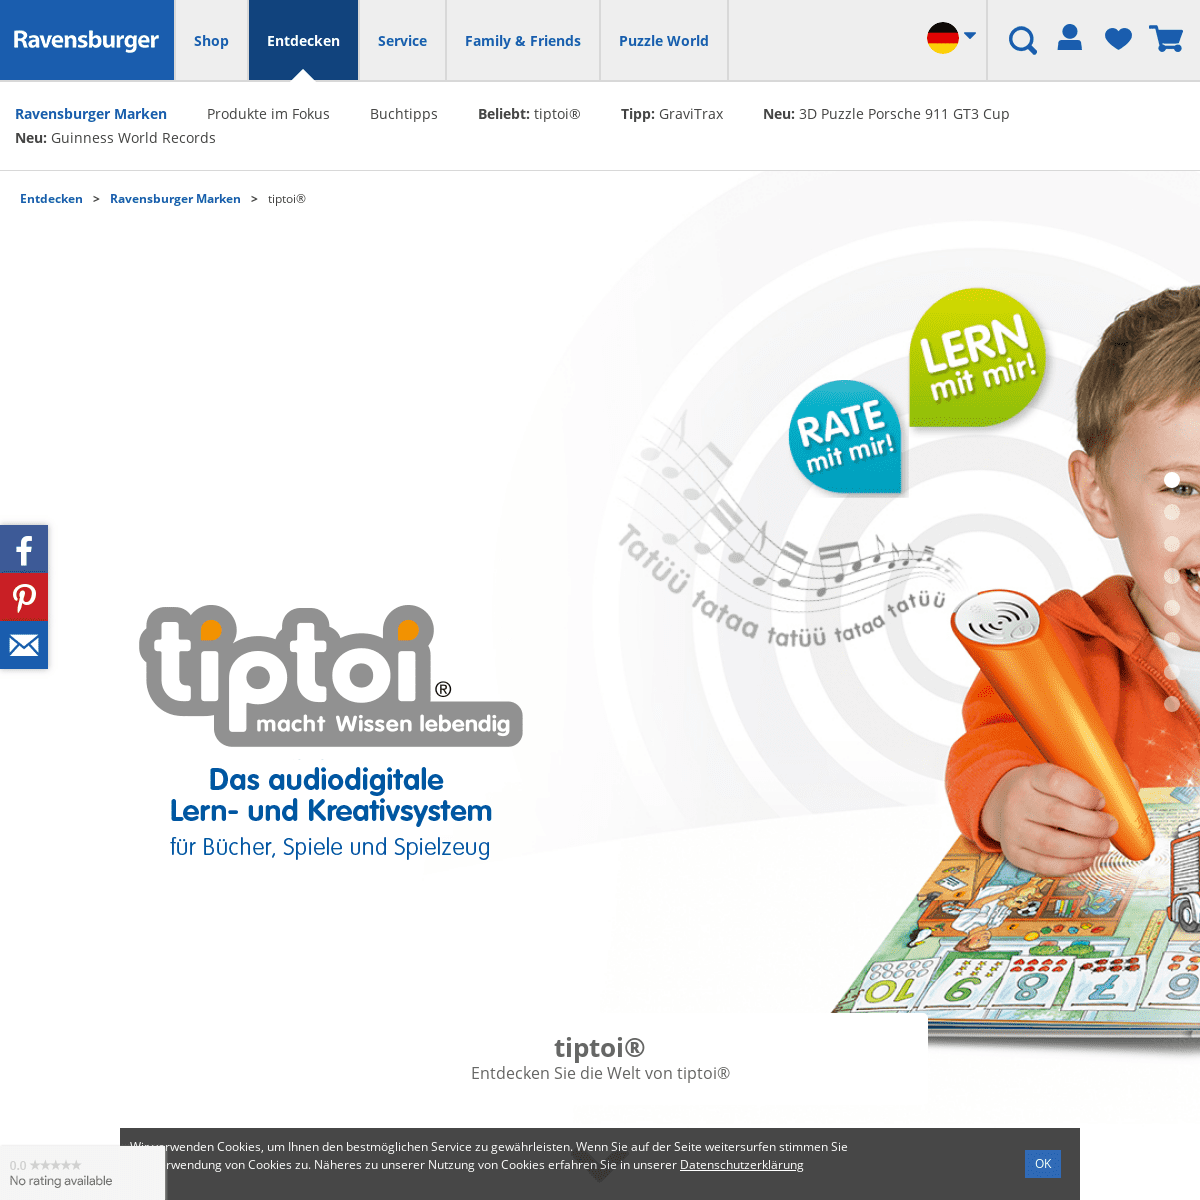 A complete backup of tiptoi.com